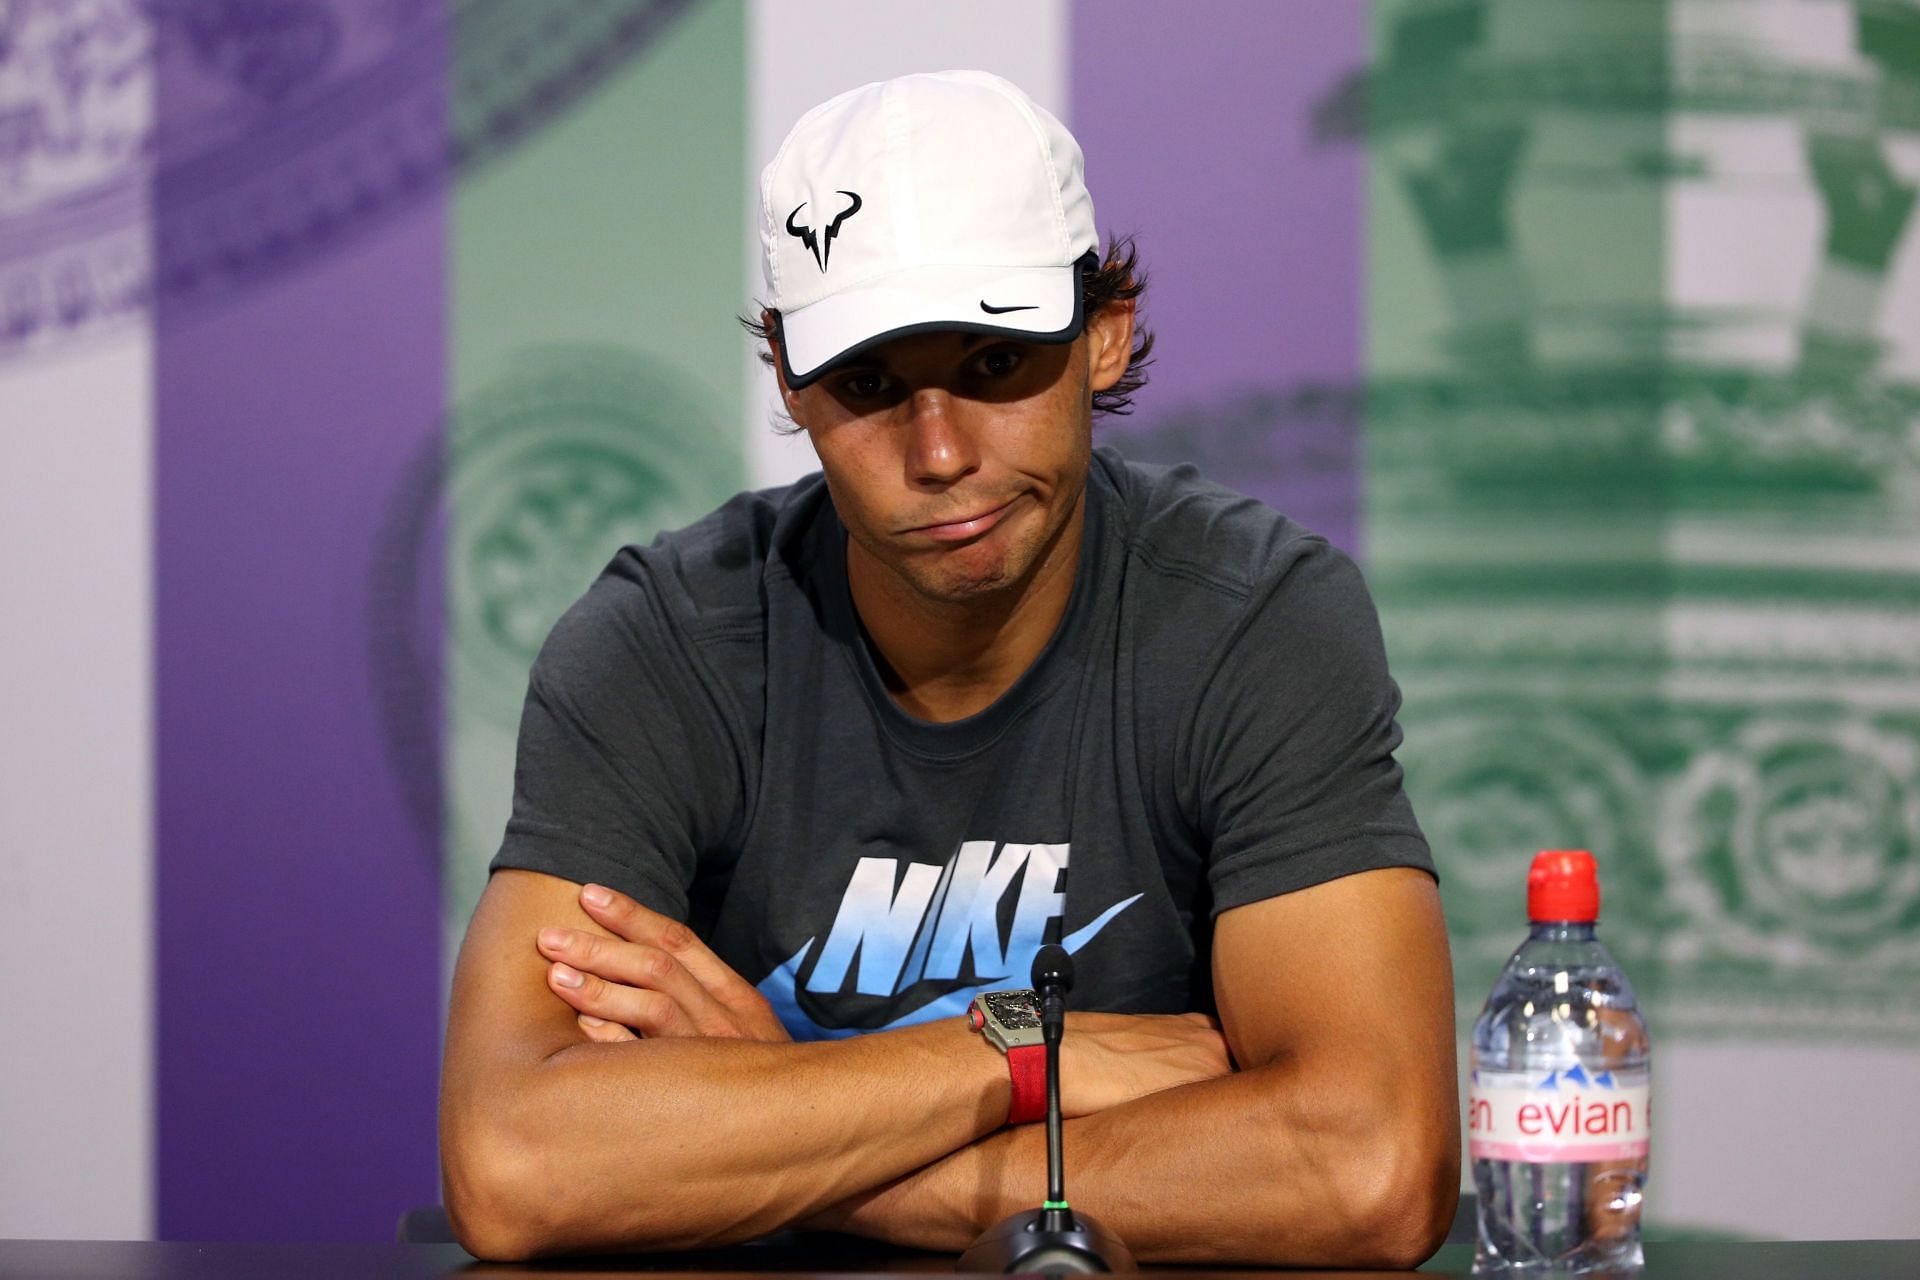 Rafael Nadal on Day Eight: The Championships - Wimbledon 2014